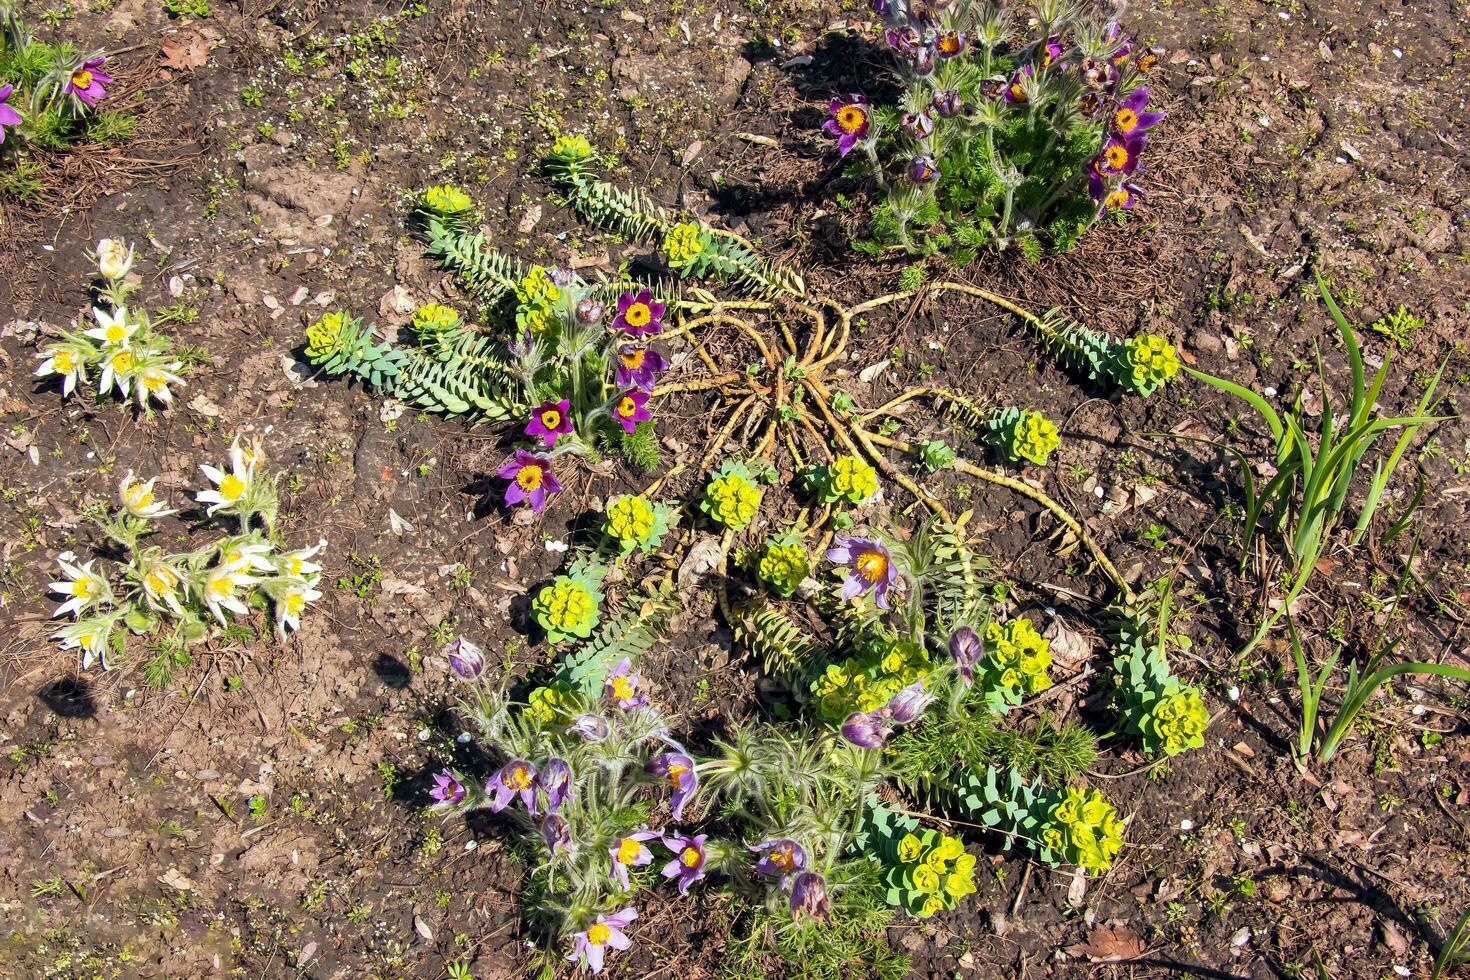 Beautiful Pulsatilla vulgaris in the garden in spring. Pulsatilla vulgaris, pasqueflower, is a species of flowering plant belonging to the buttercup family, Ranunculaceae. photo